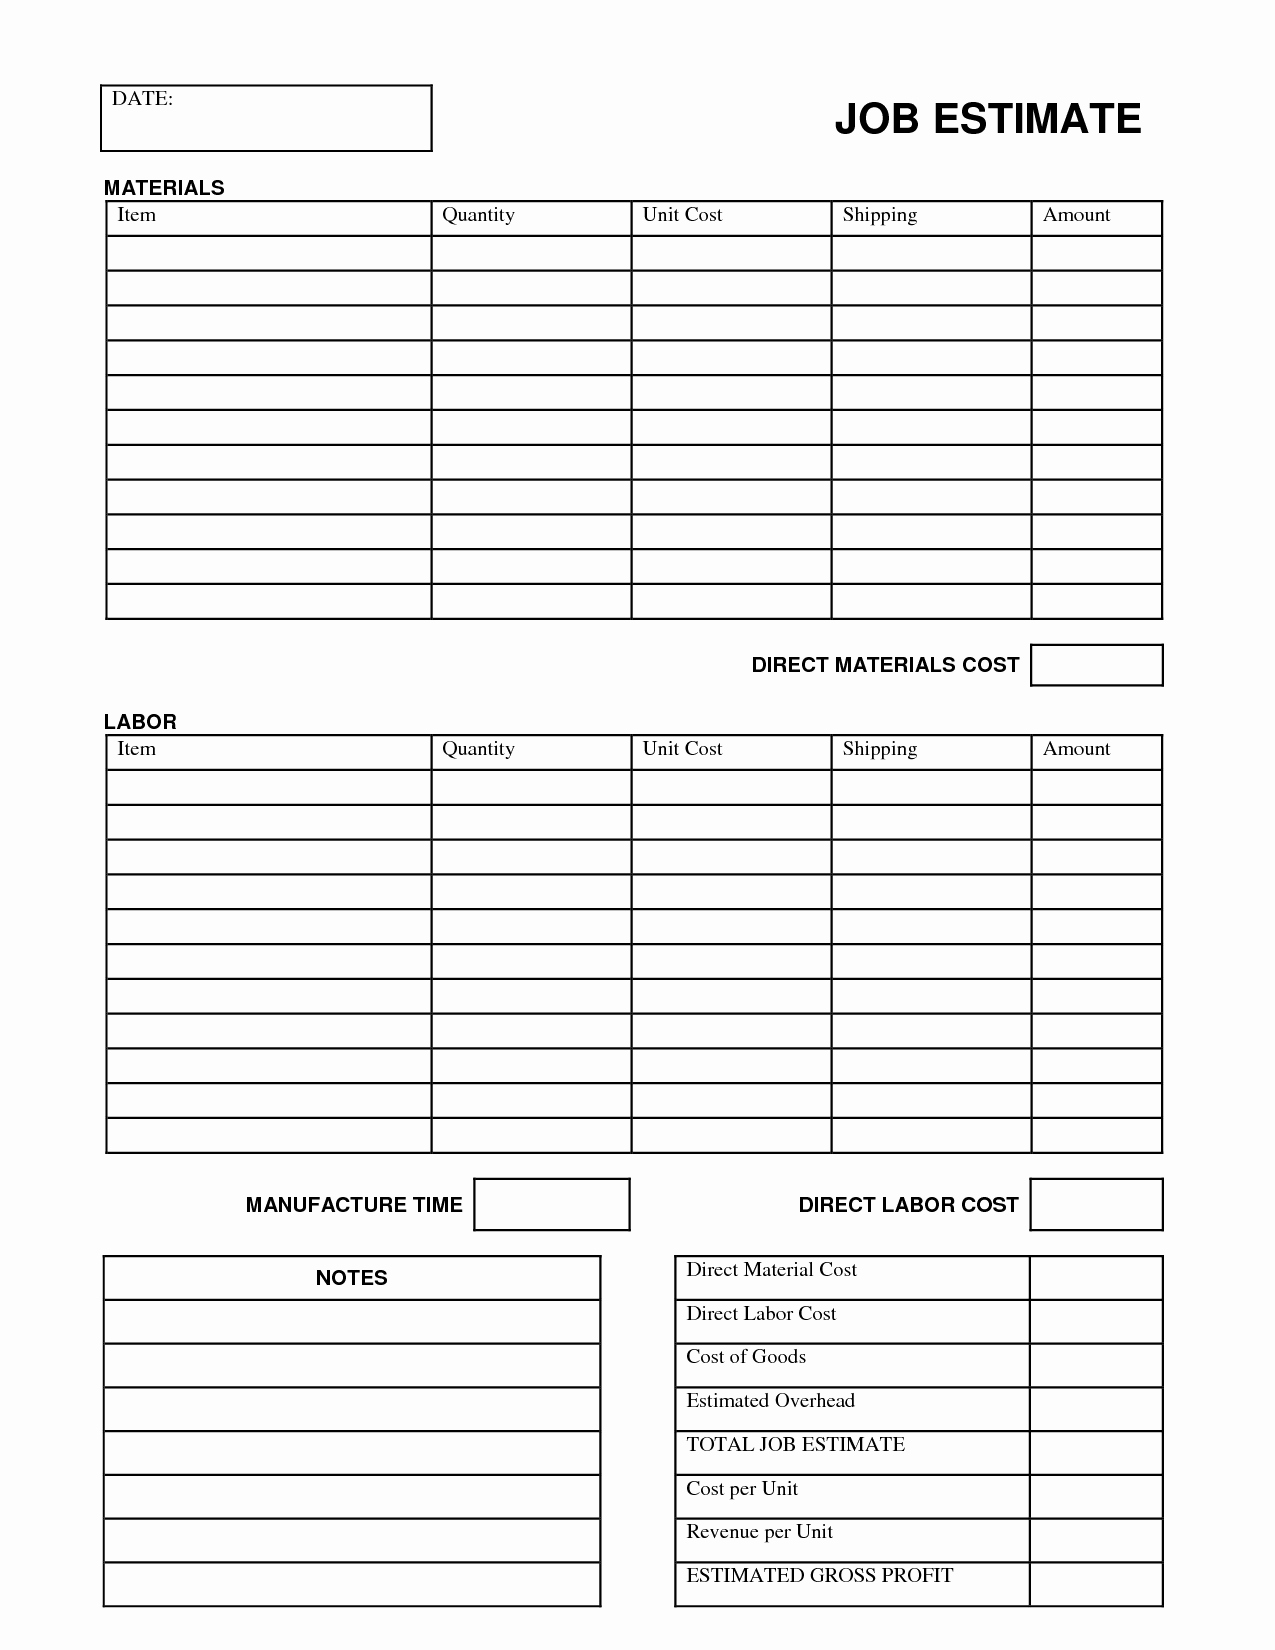 Job Estimate Template Excel Unique Printable Job Estimate forms